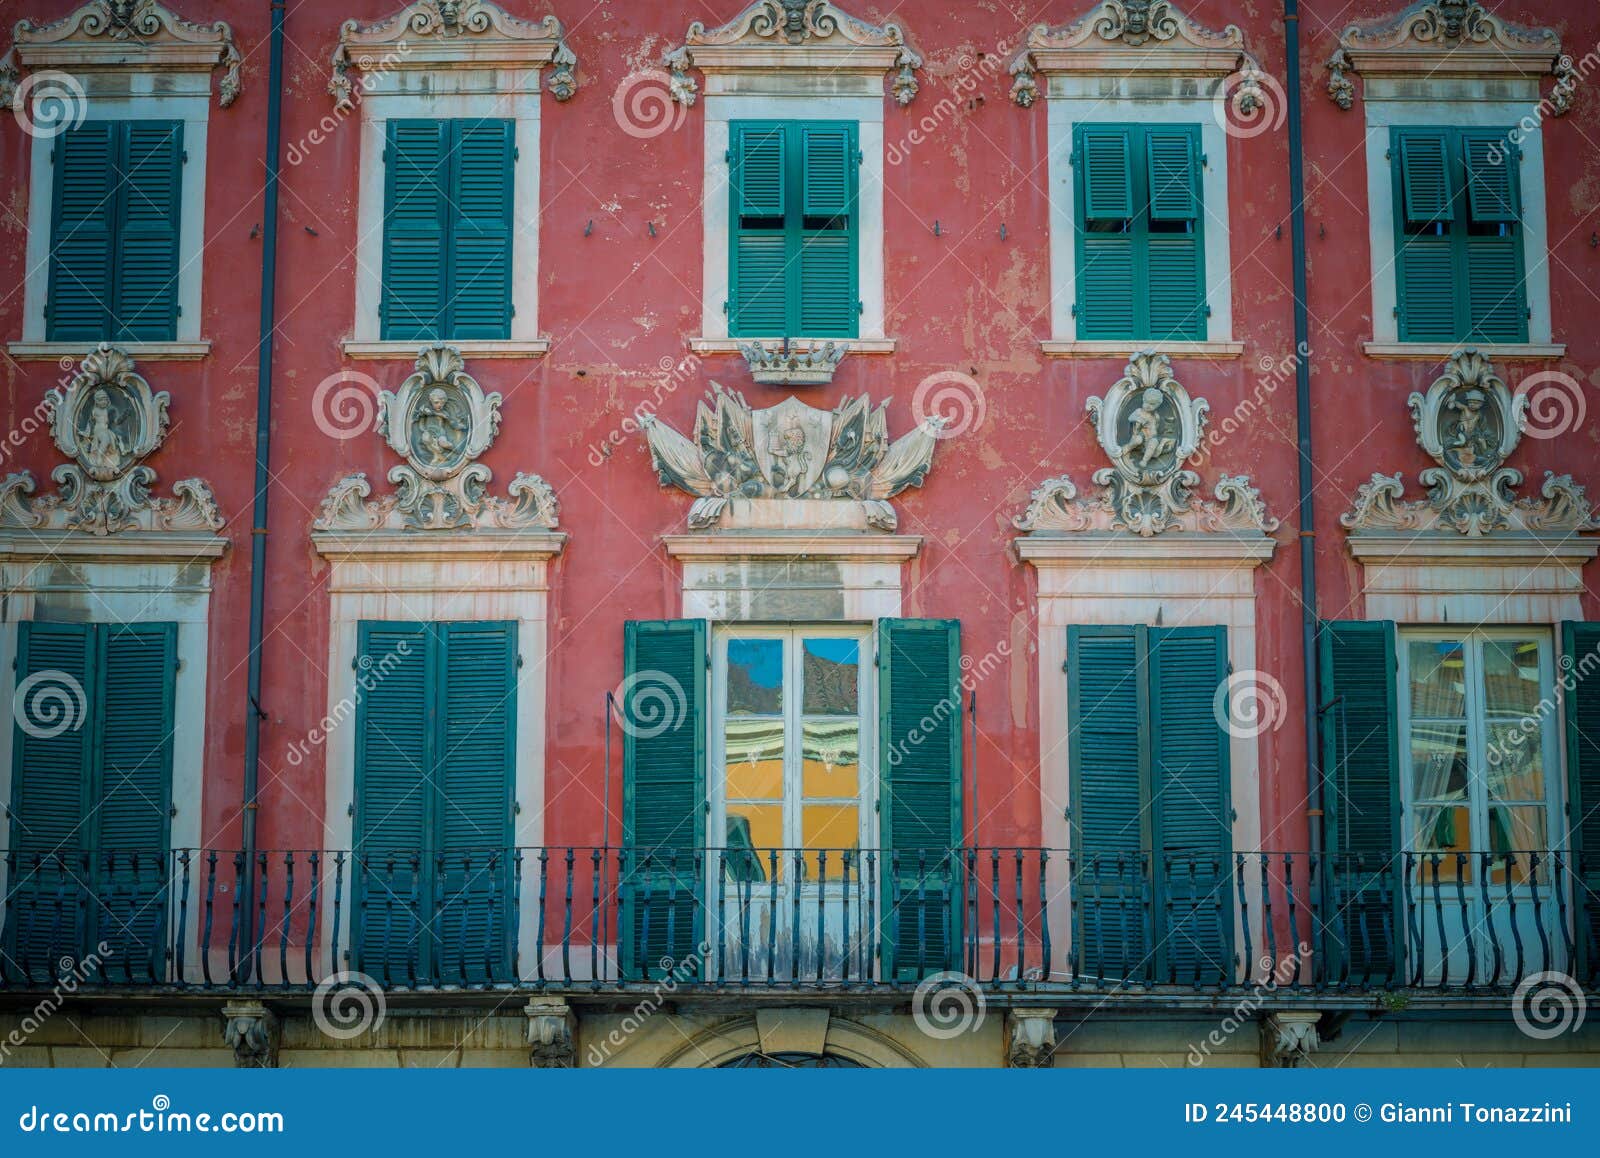 `del medico` palace, historical building in carrara, tuscany, italy